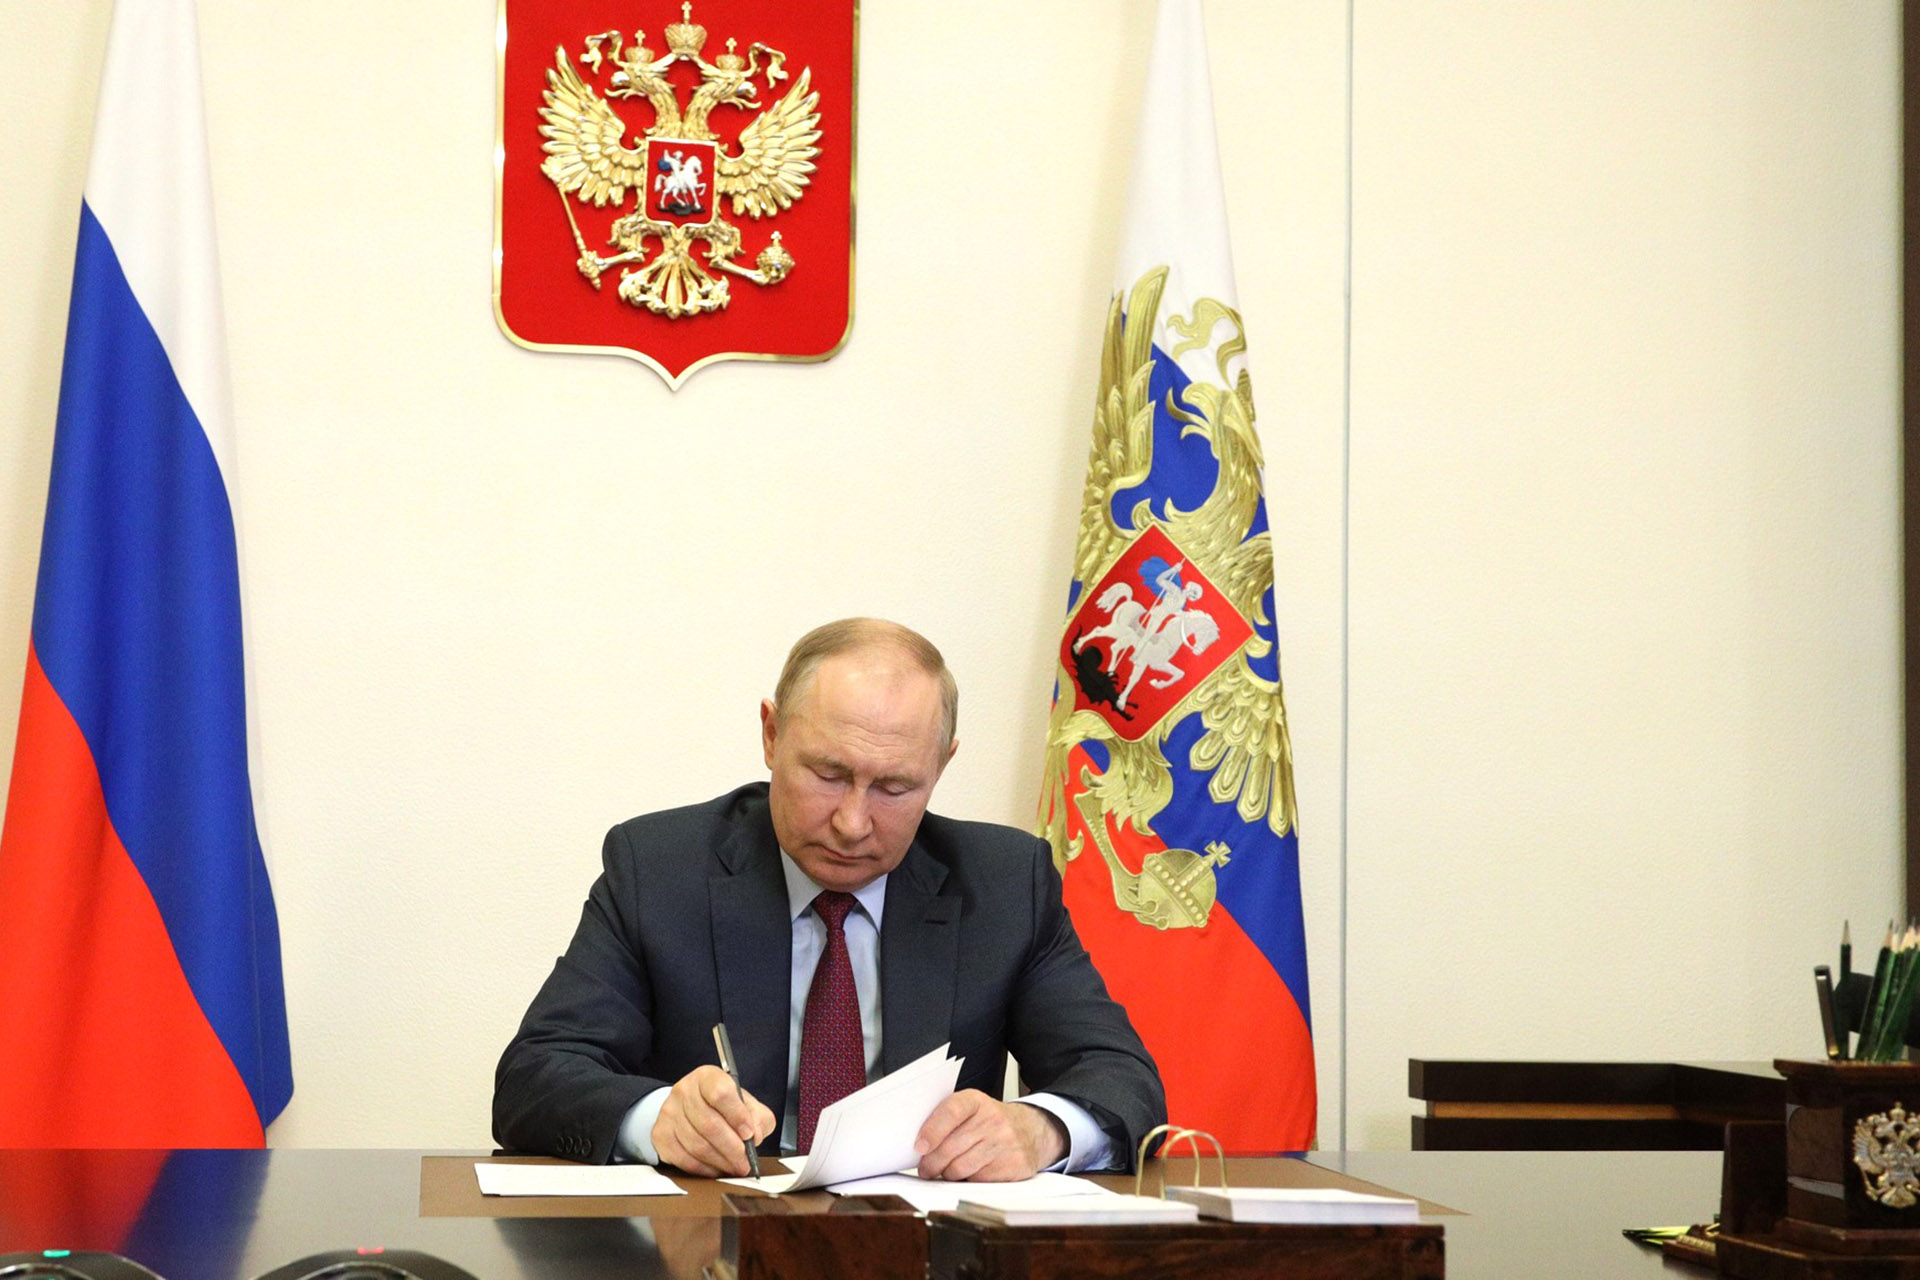 Bild: Kremlin.ru, Vladimir Putin (2022-08-10), CC BY 4.0, via Wikimedia Commons (Bildgröße geändert)